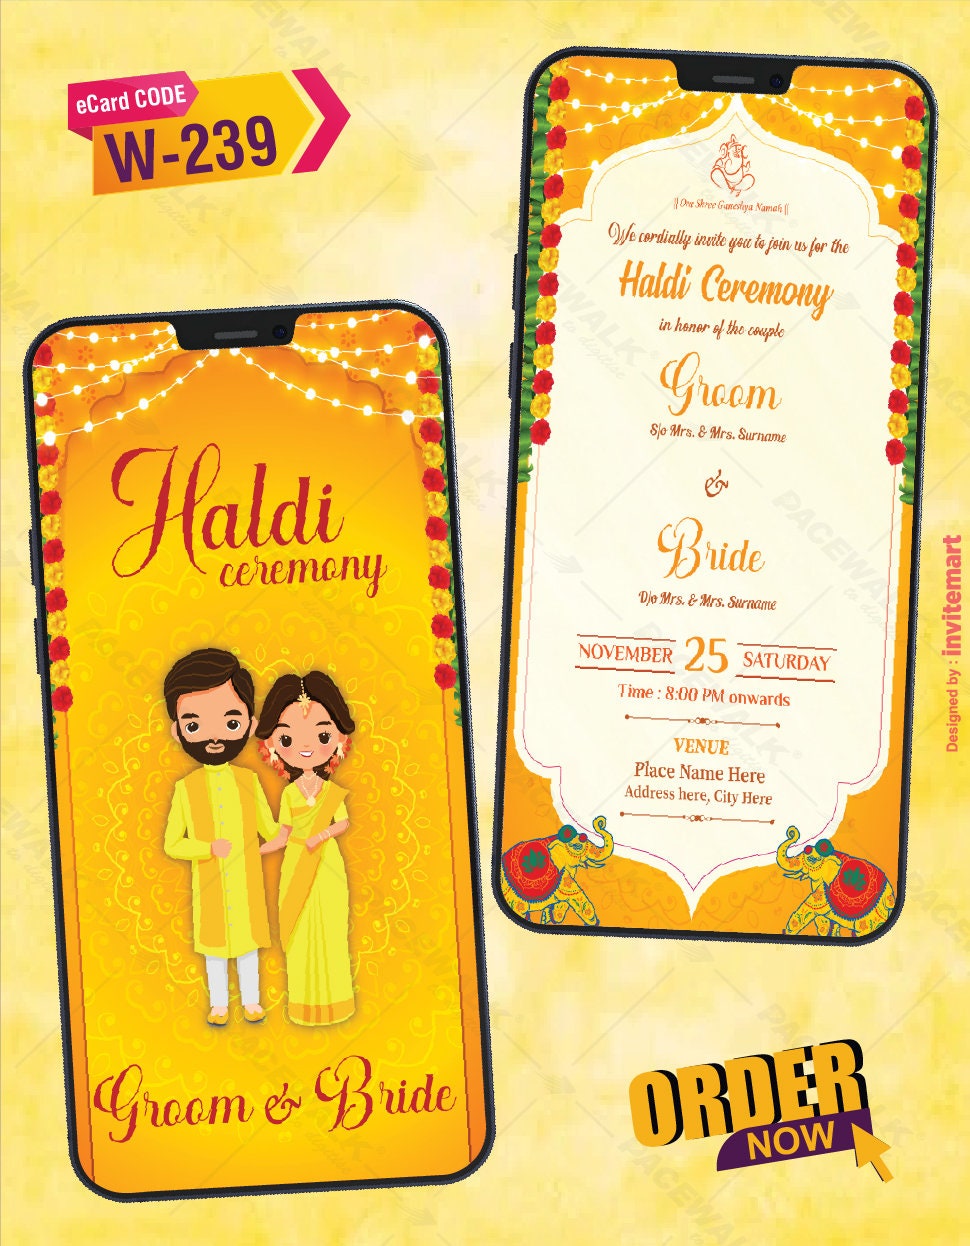 W-219 WhatsApp Invitation Card floral ecard Beautiful Haldi Ceremony Invitation Card